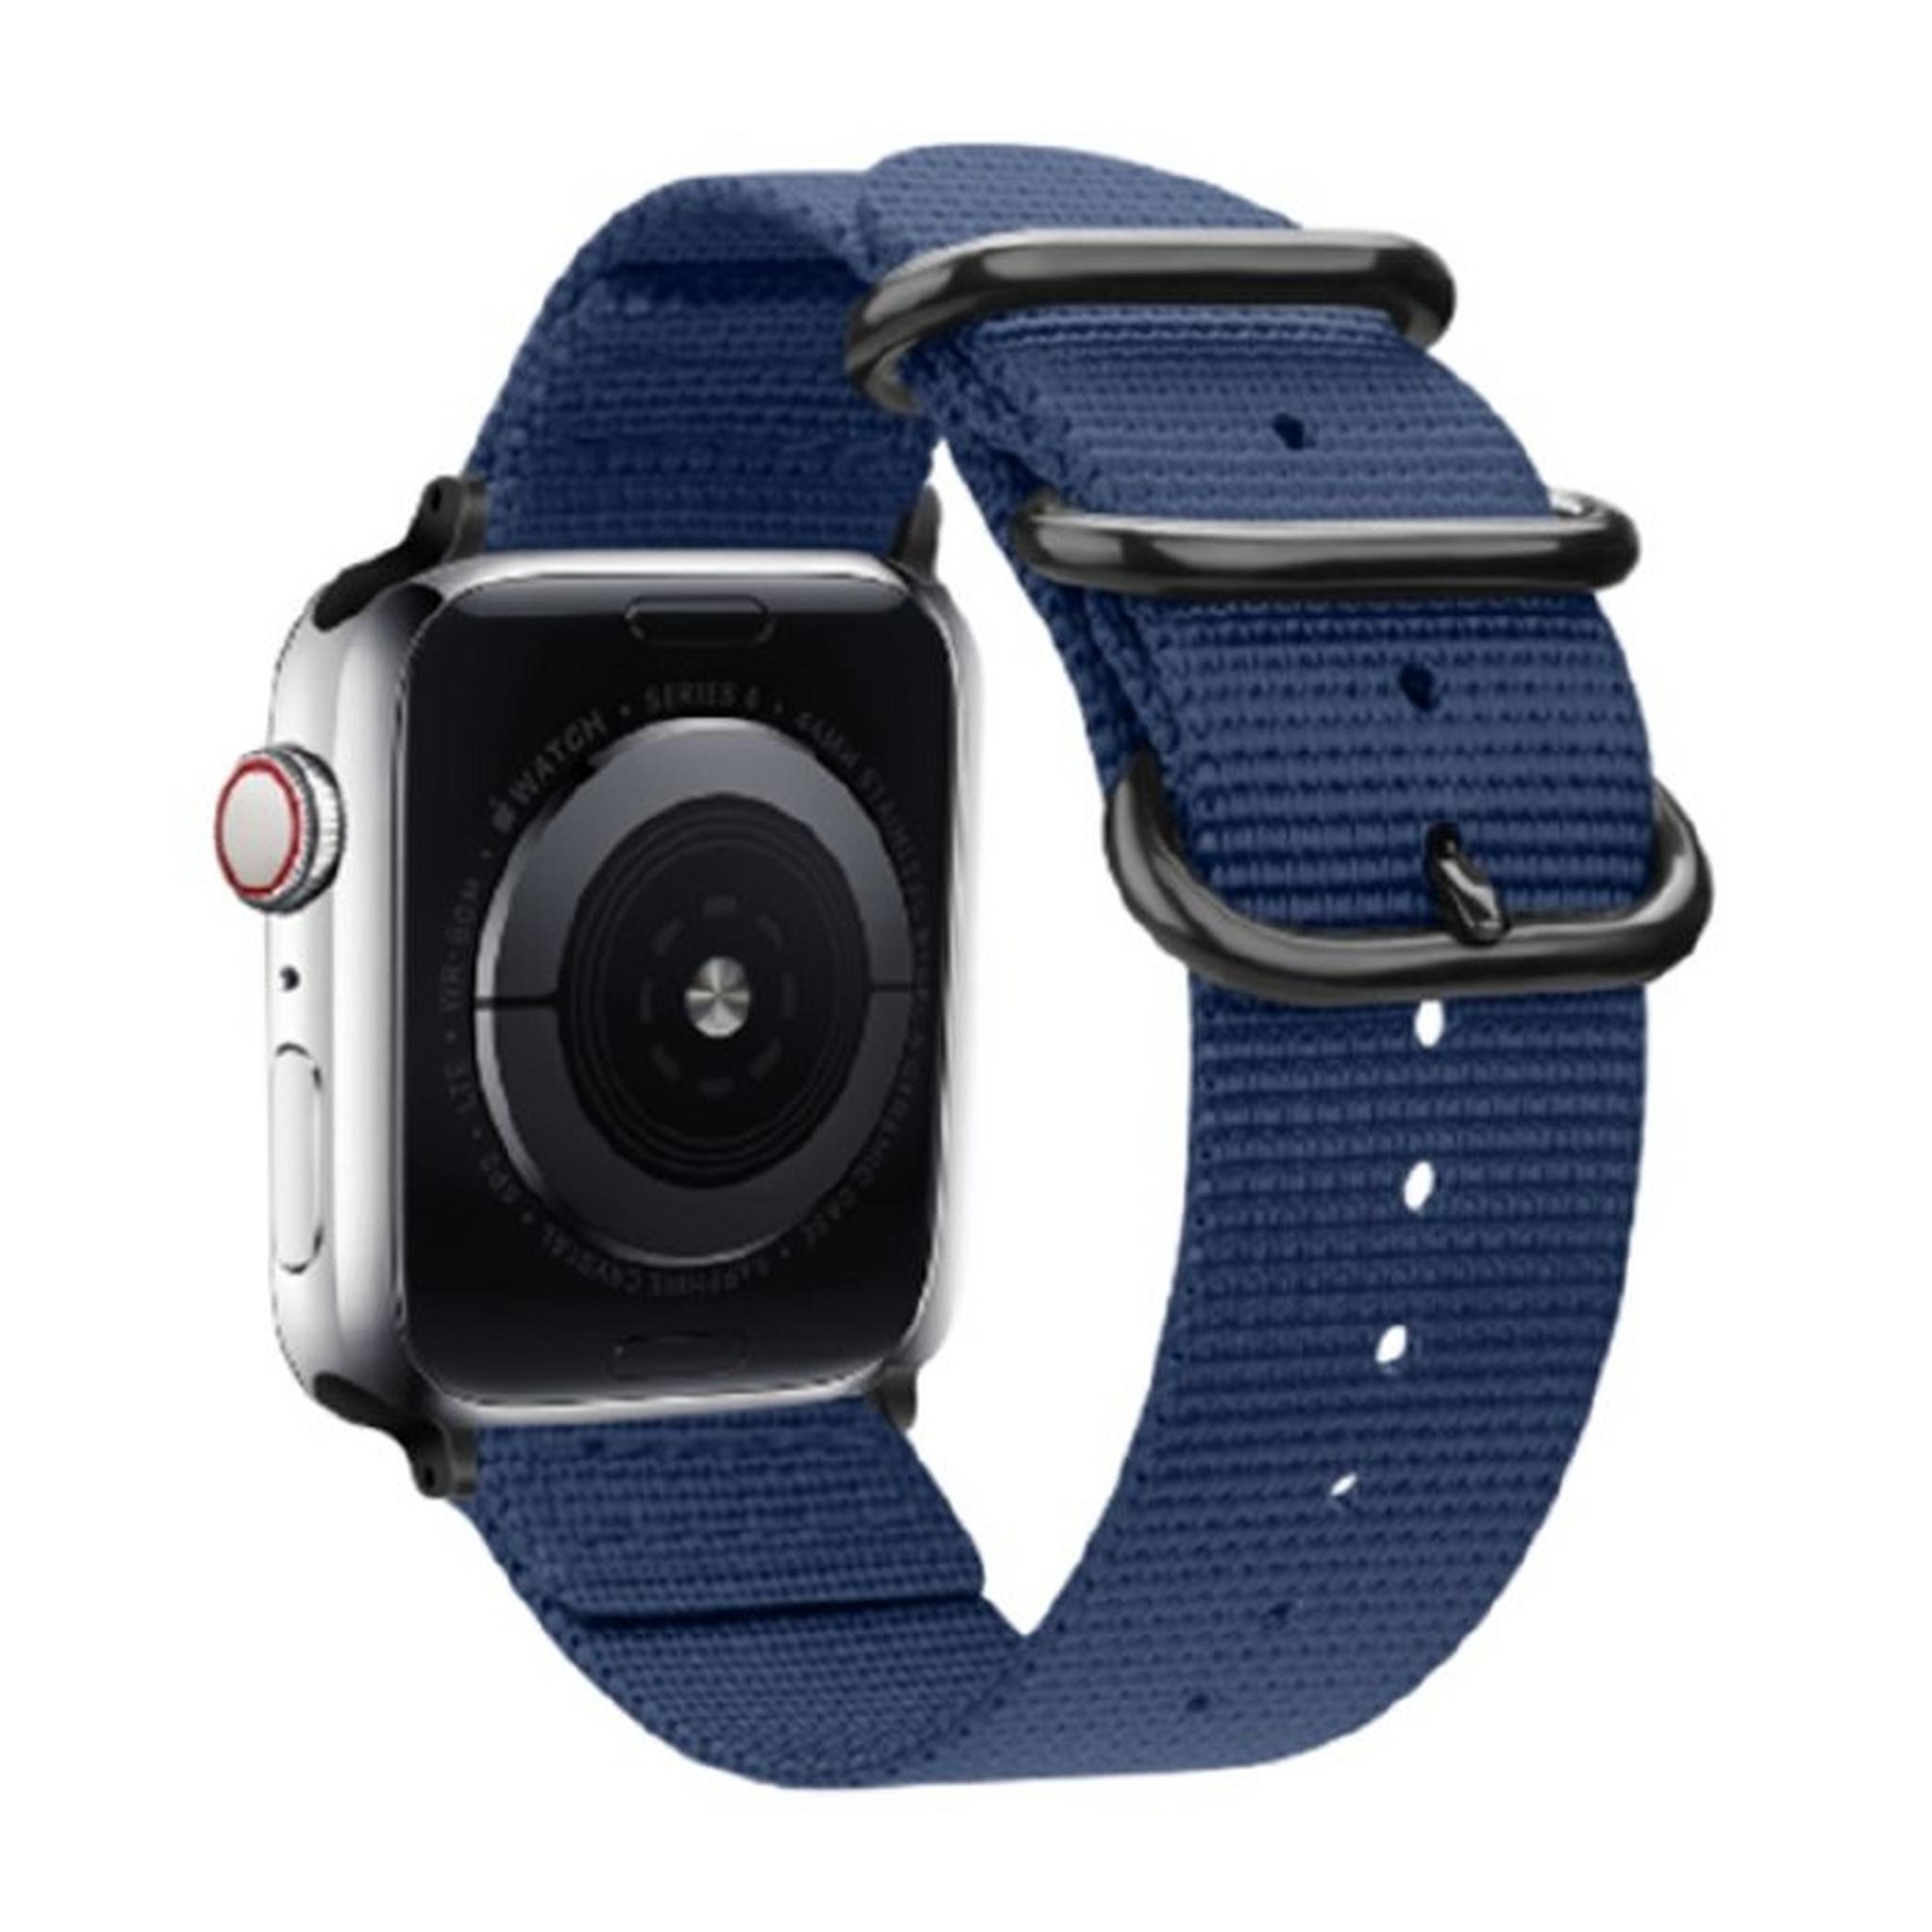 EQ Apple Watch Band Size 38/40MM (OCT 1031) -  Navy Blue